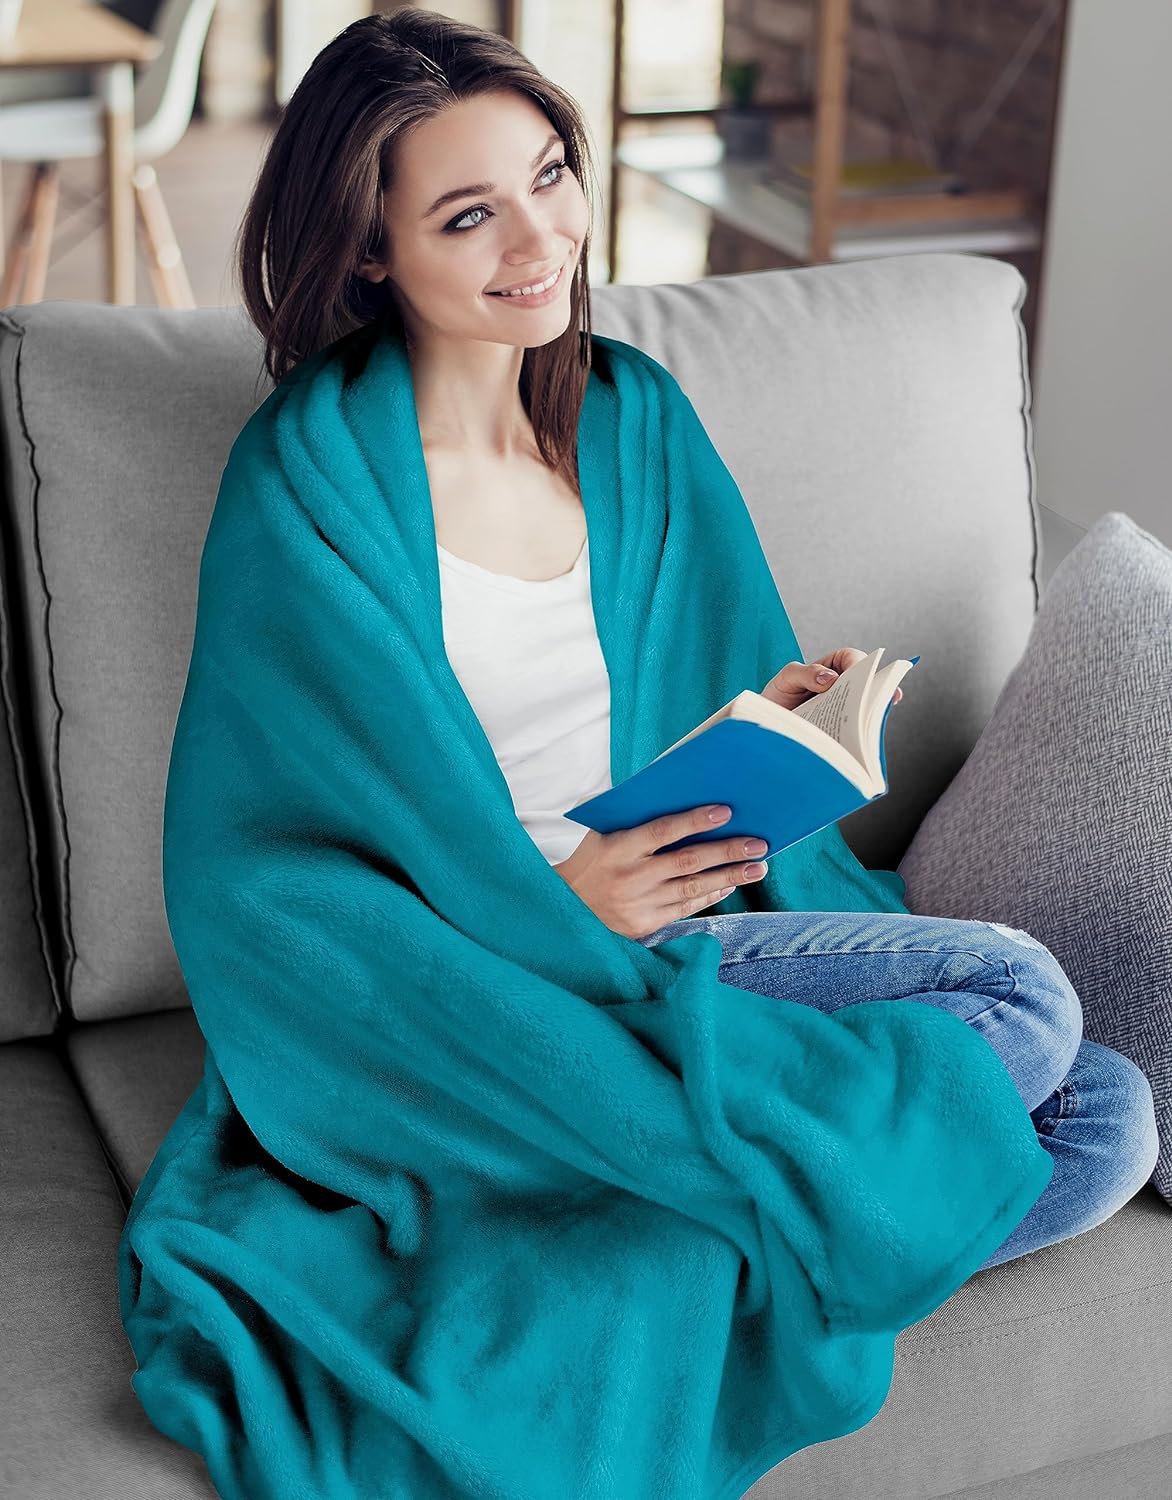 Utopia Bedding Fleece Blanket Twin Size Burgundy 300GSM Luxury Bed Blanket Anti-Static Fuzzy Soft Blanket Microfiber